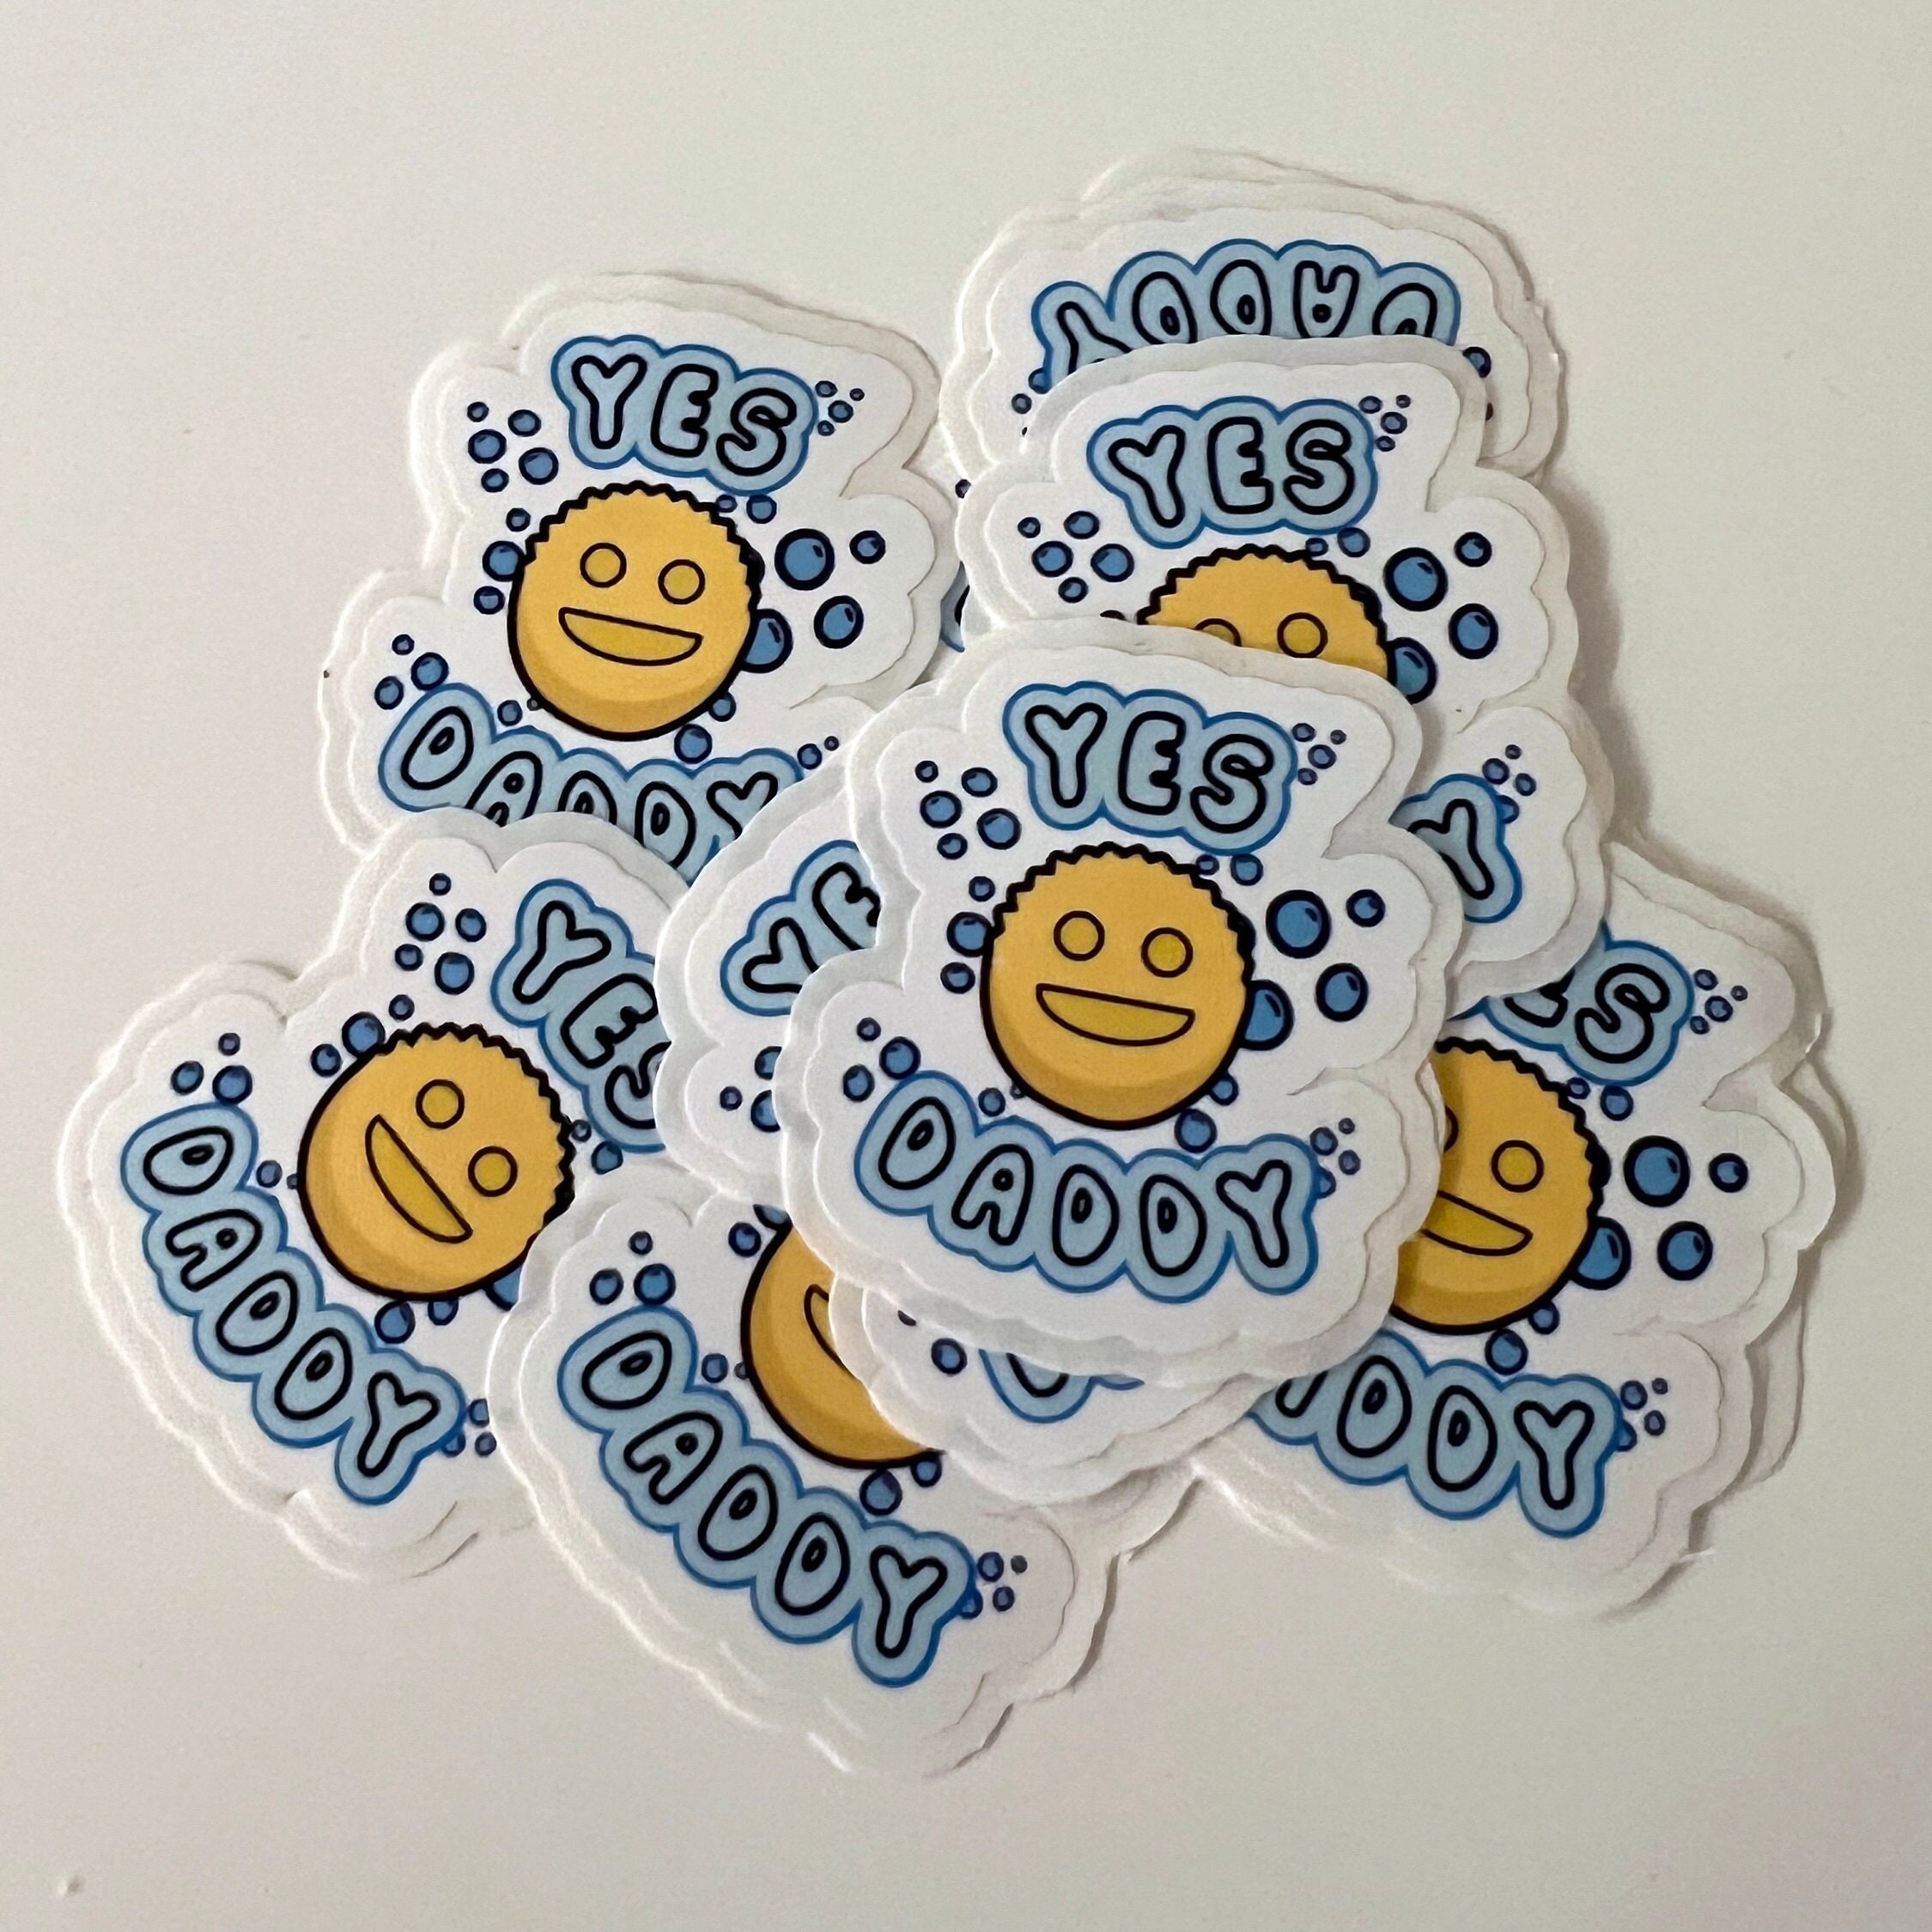 Scrub Daddy Sponge Funny Sticker / WATERPROOF / Easy Peel / Glossy Finish /  Funny Gift / Bridesmaid Gifts / NSFW Sticker 